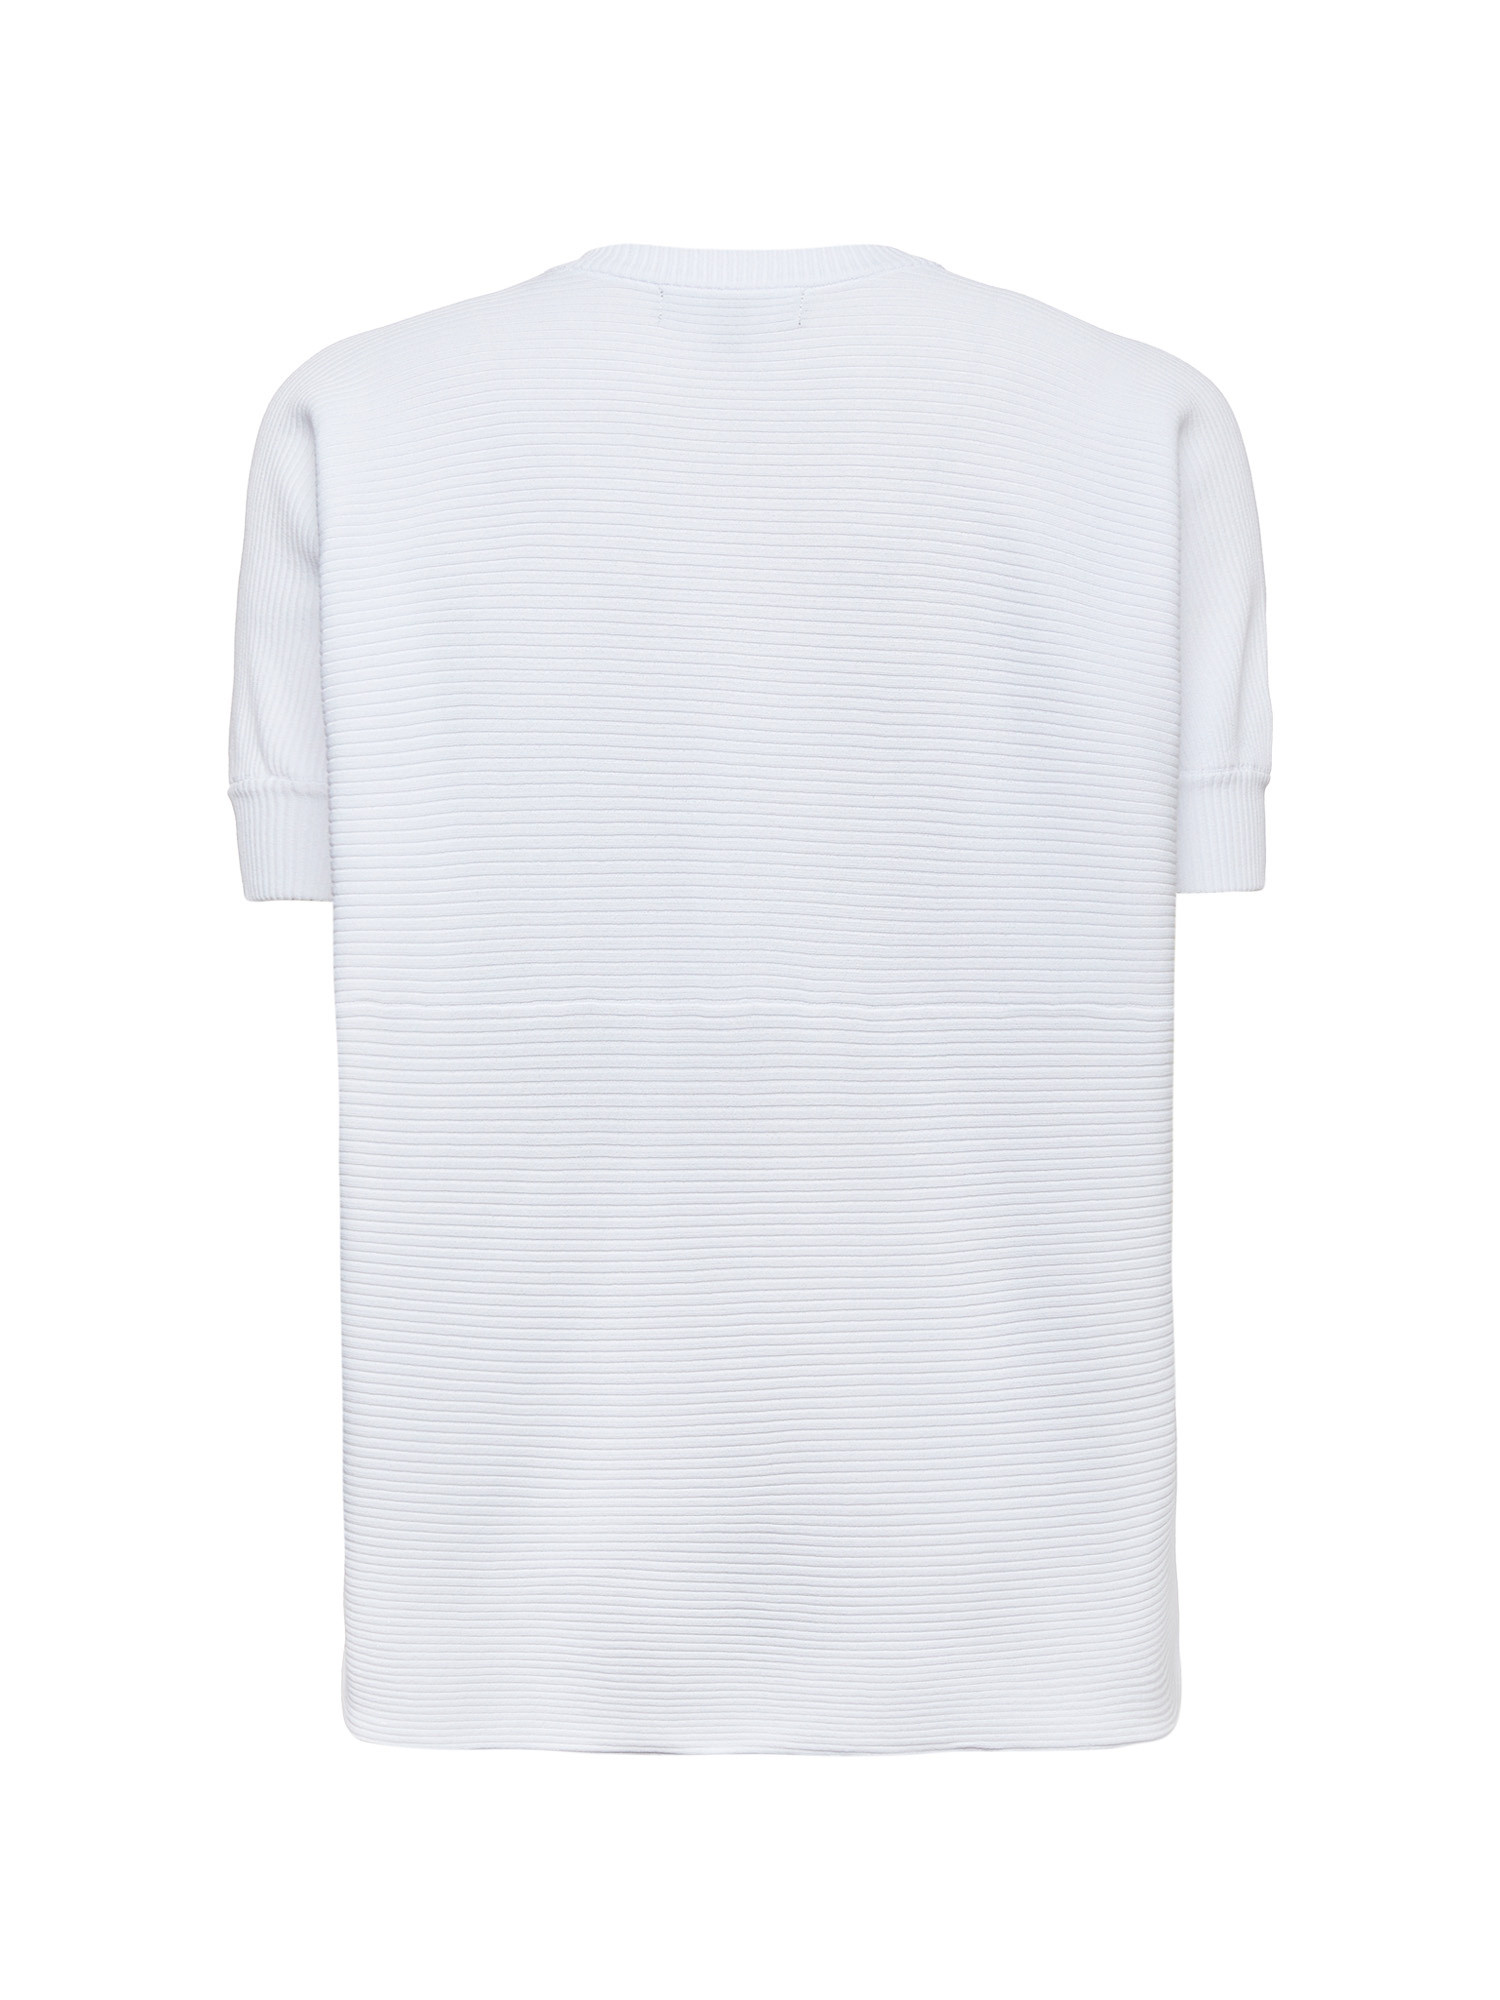 Armani Exchange - Ribbed sweater with logo, White, large image number 1